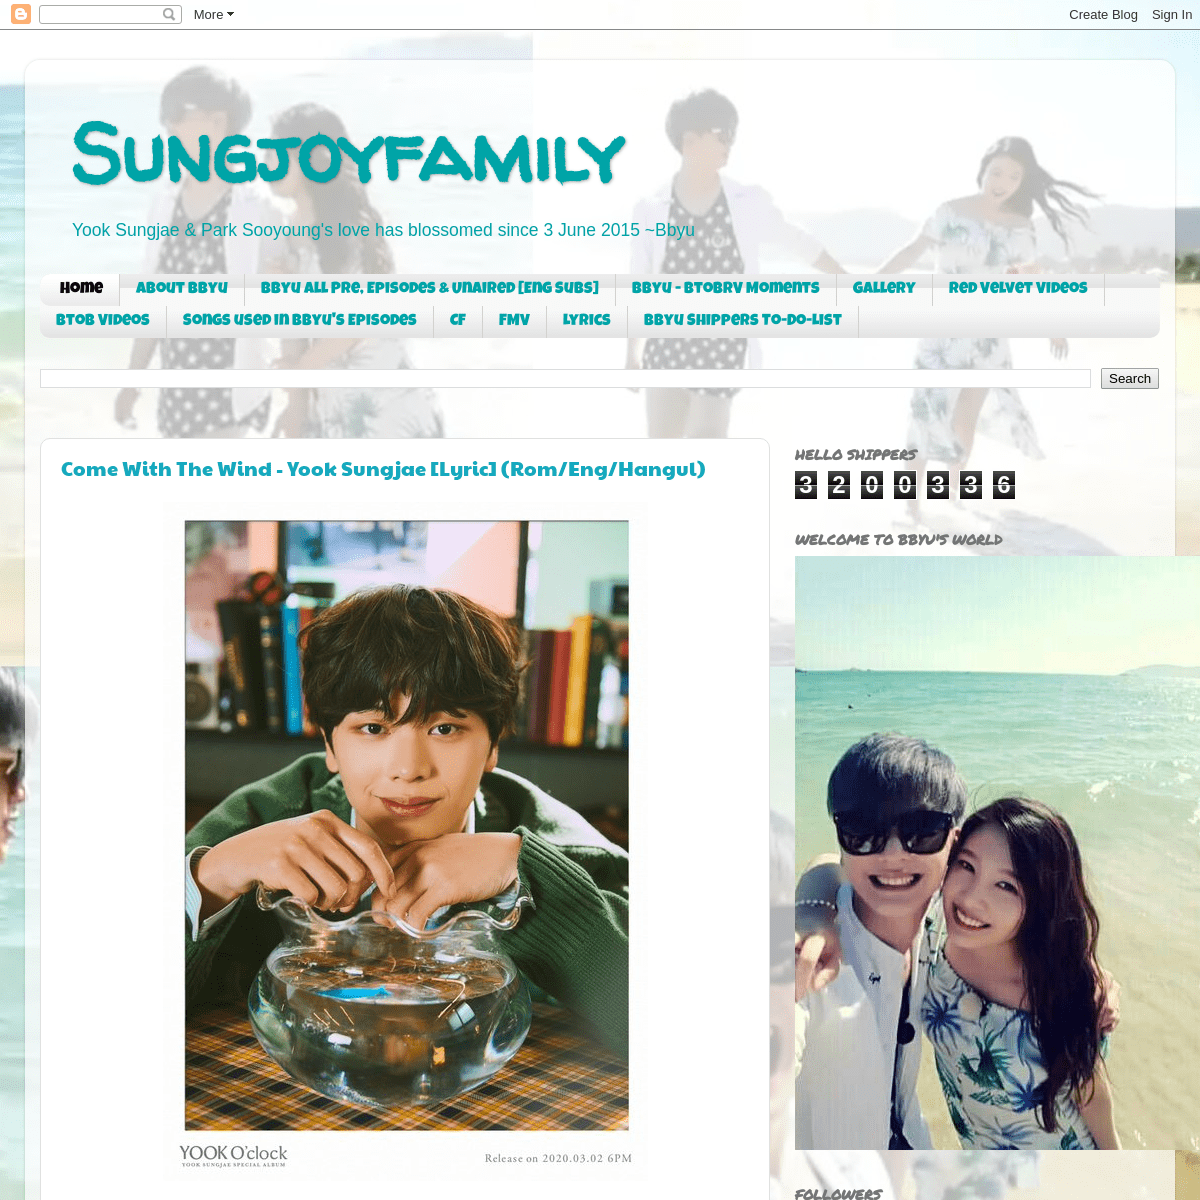 A complete backup of sungjoyfamily.blogspot.com